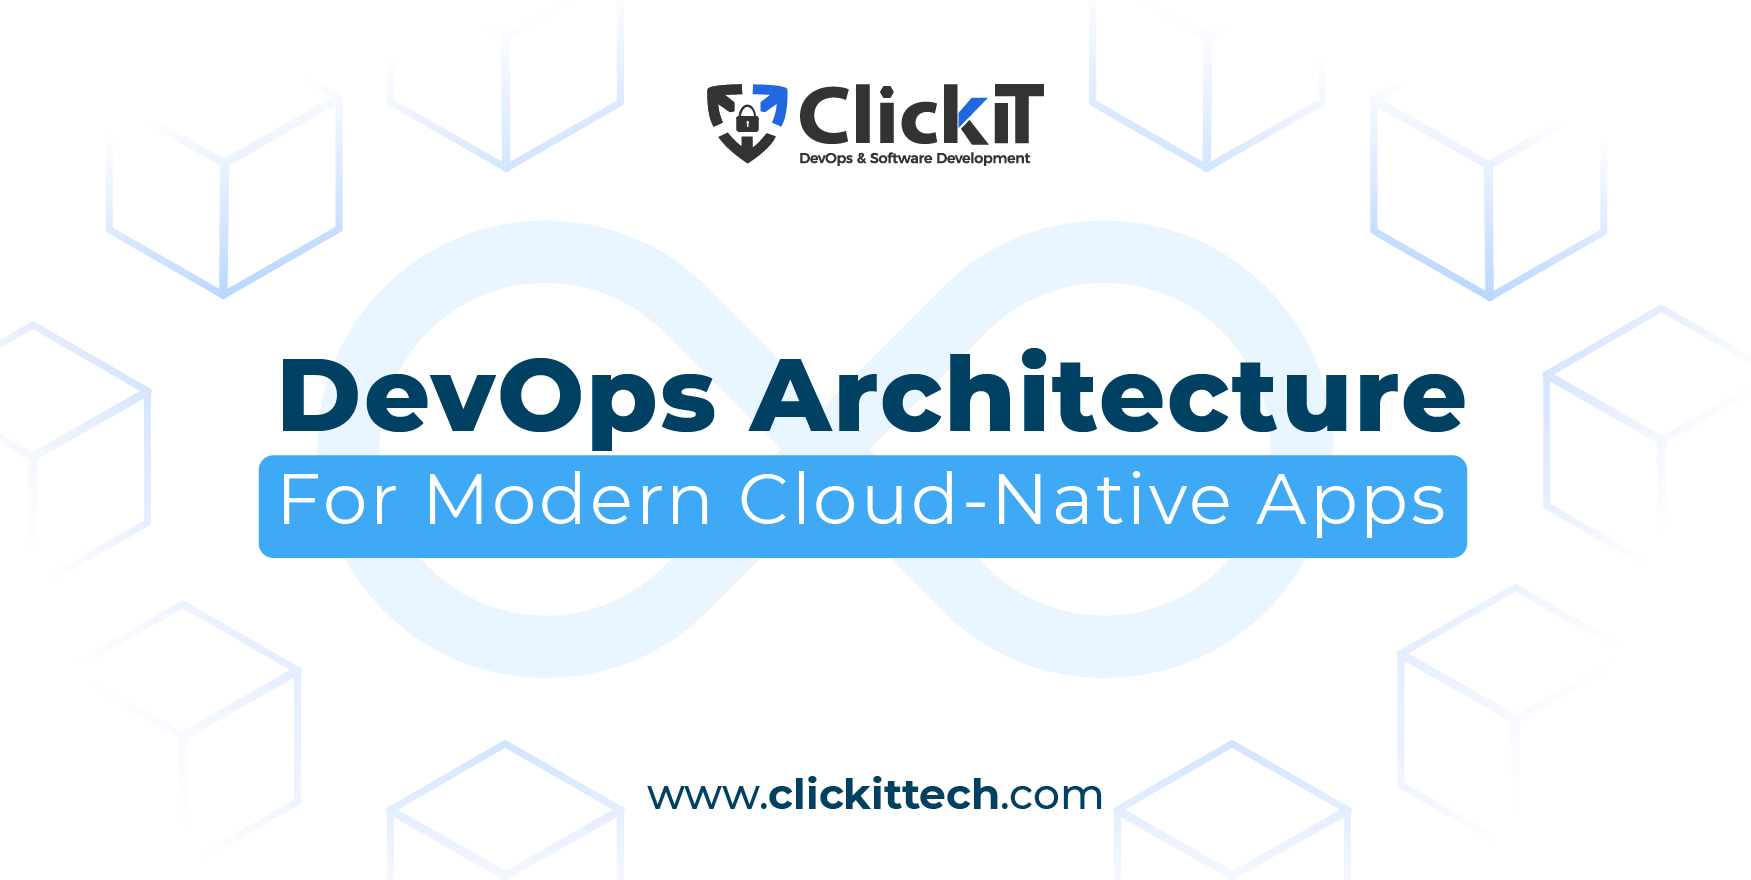 DevOps Architecture for Modern Cloud-Native Apps